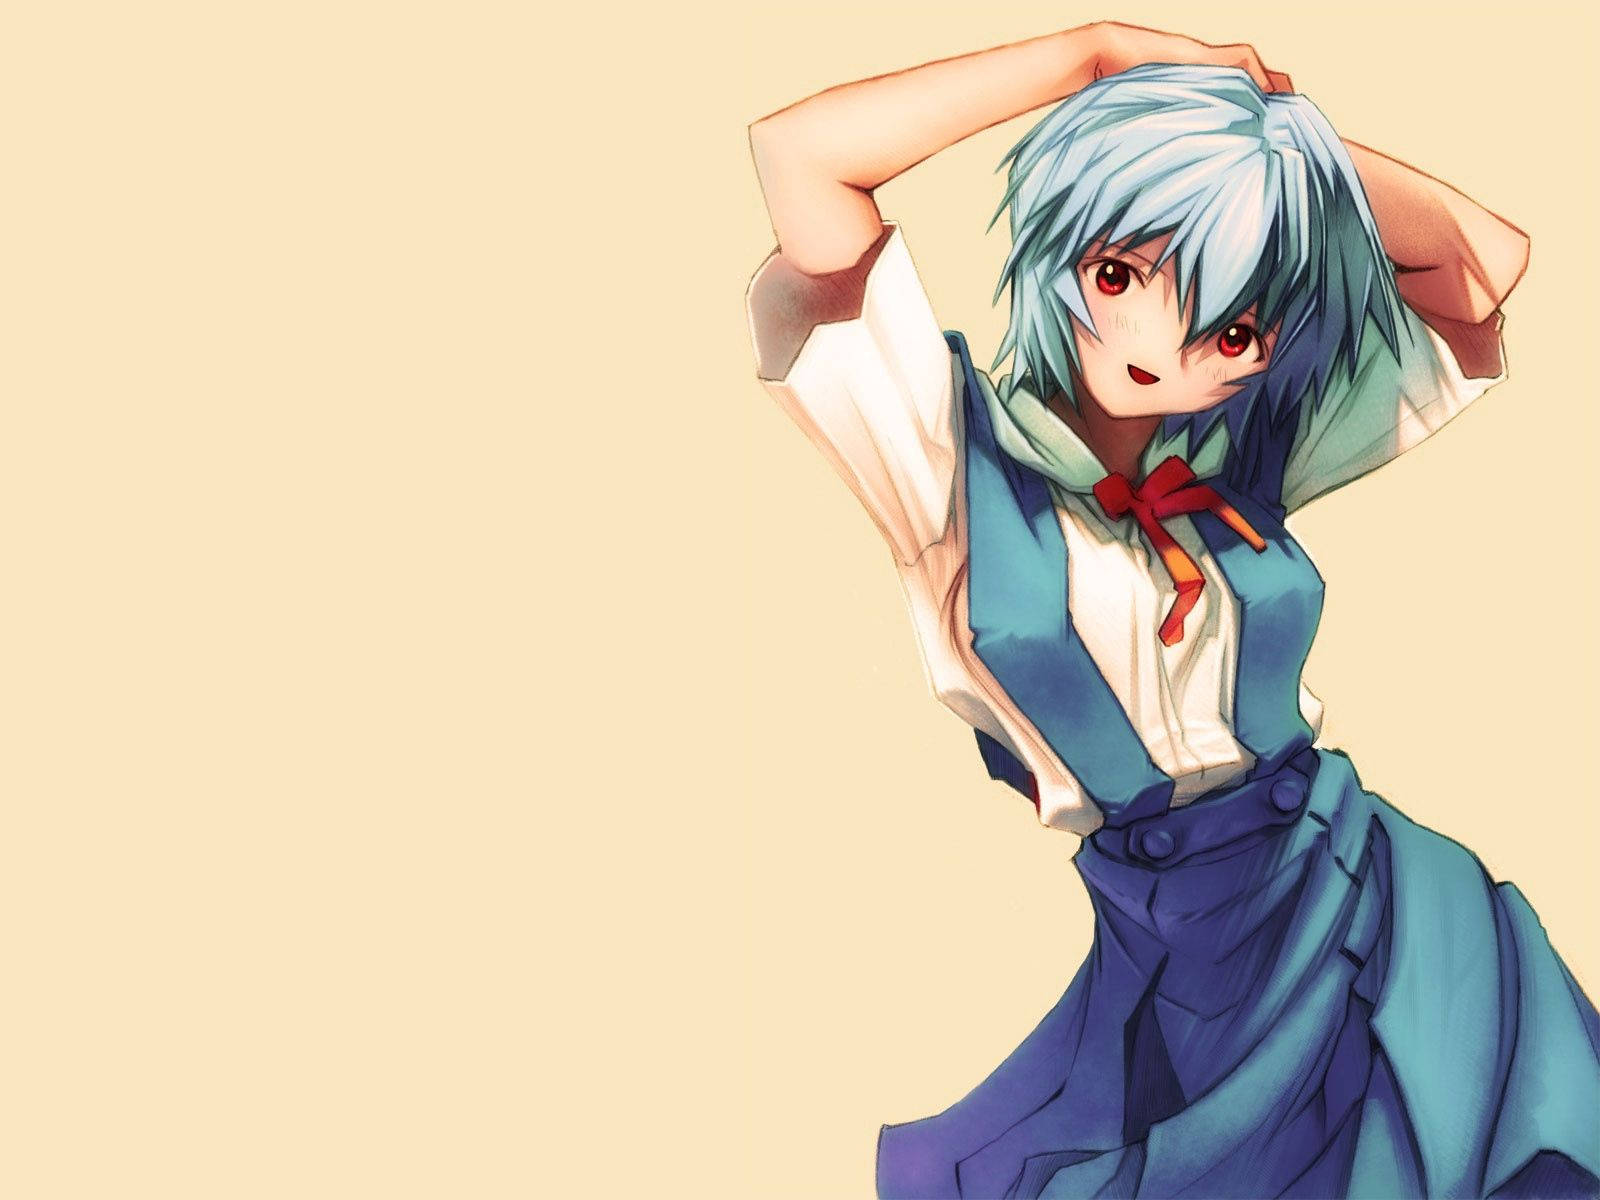 Cute Anime Girl In Blue Uniform Wallpaper